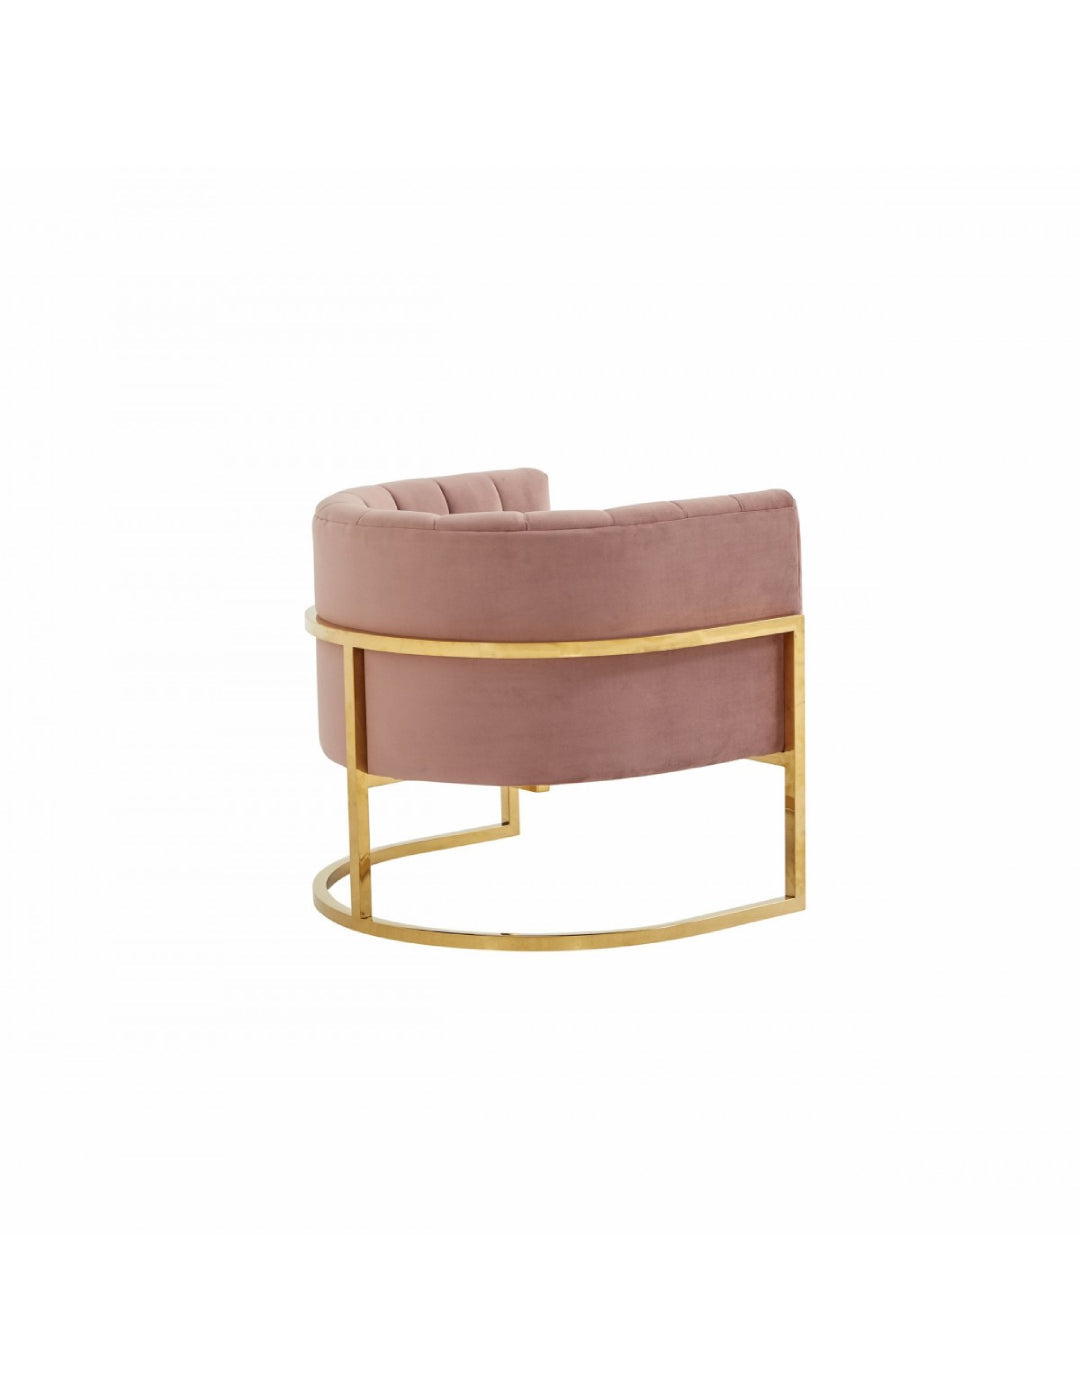 Modrest Landau Modern Velvet & Gold Accent Chair